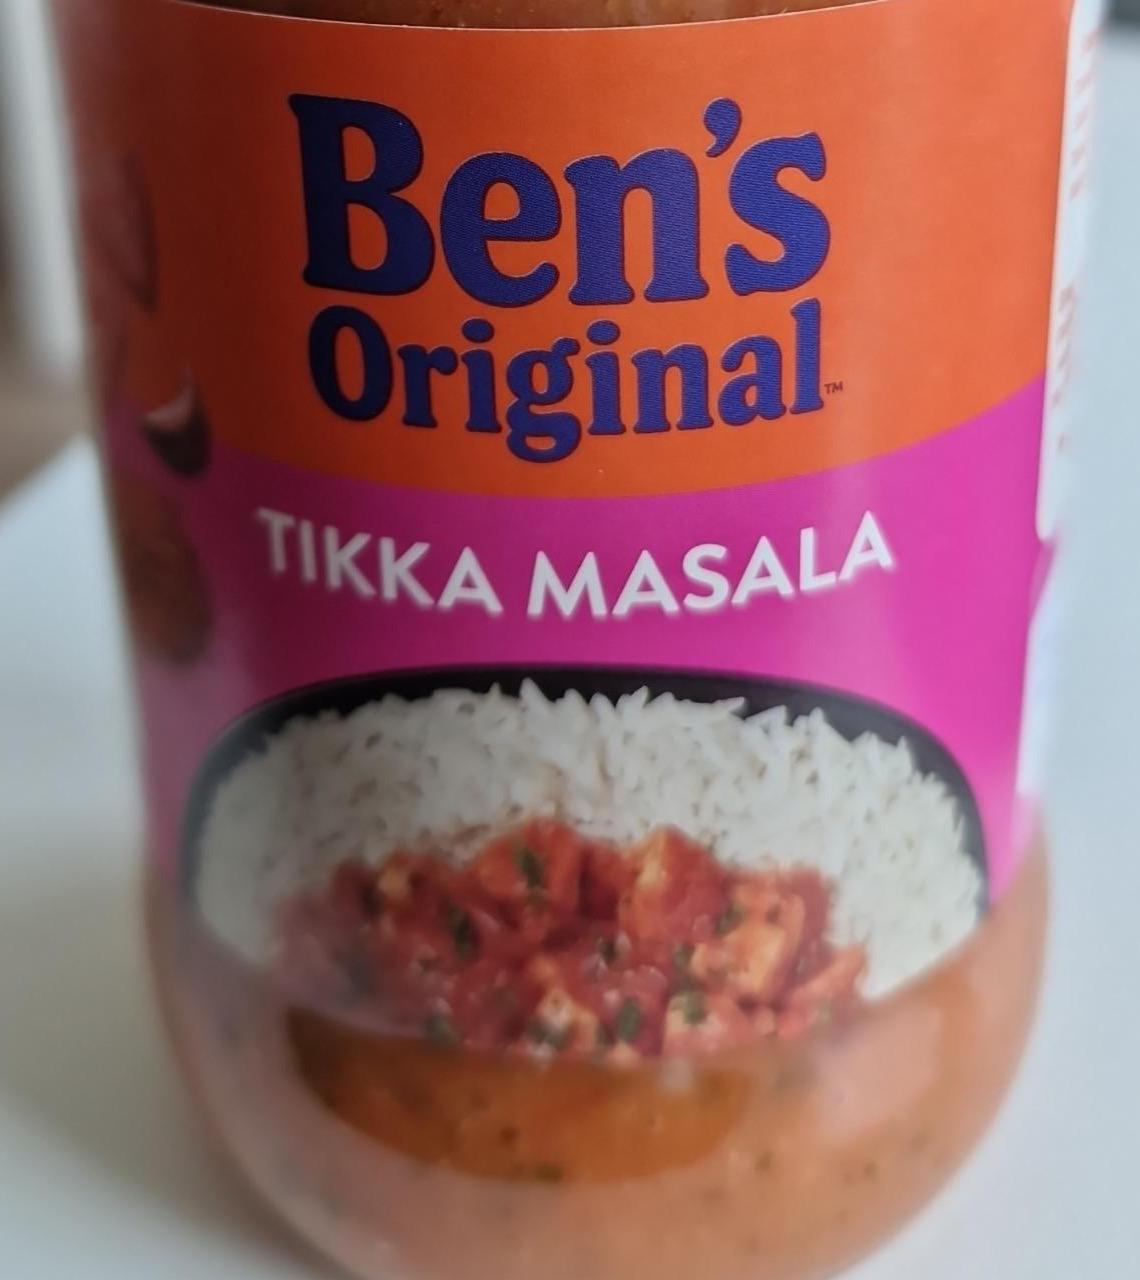 Képek - Tikka masala Ben's Original